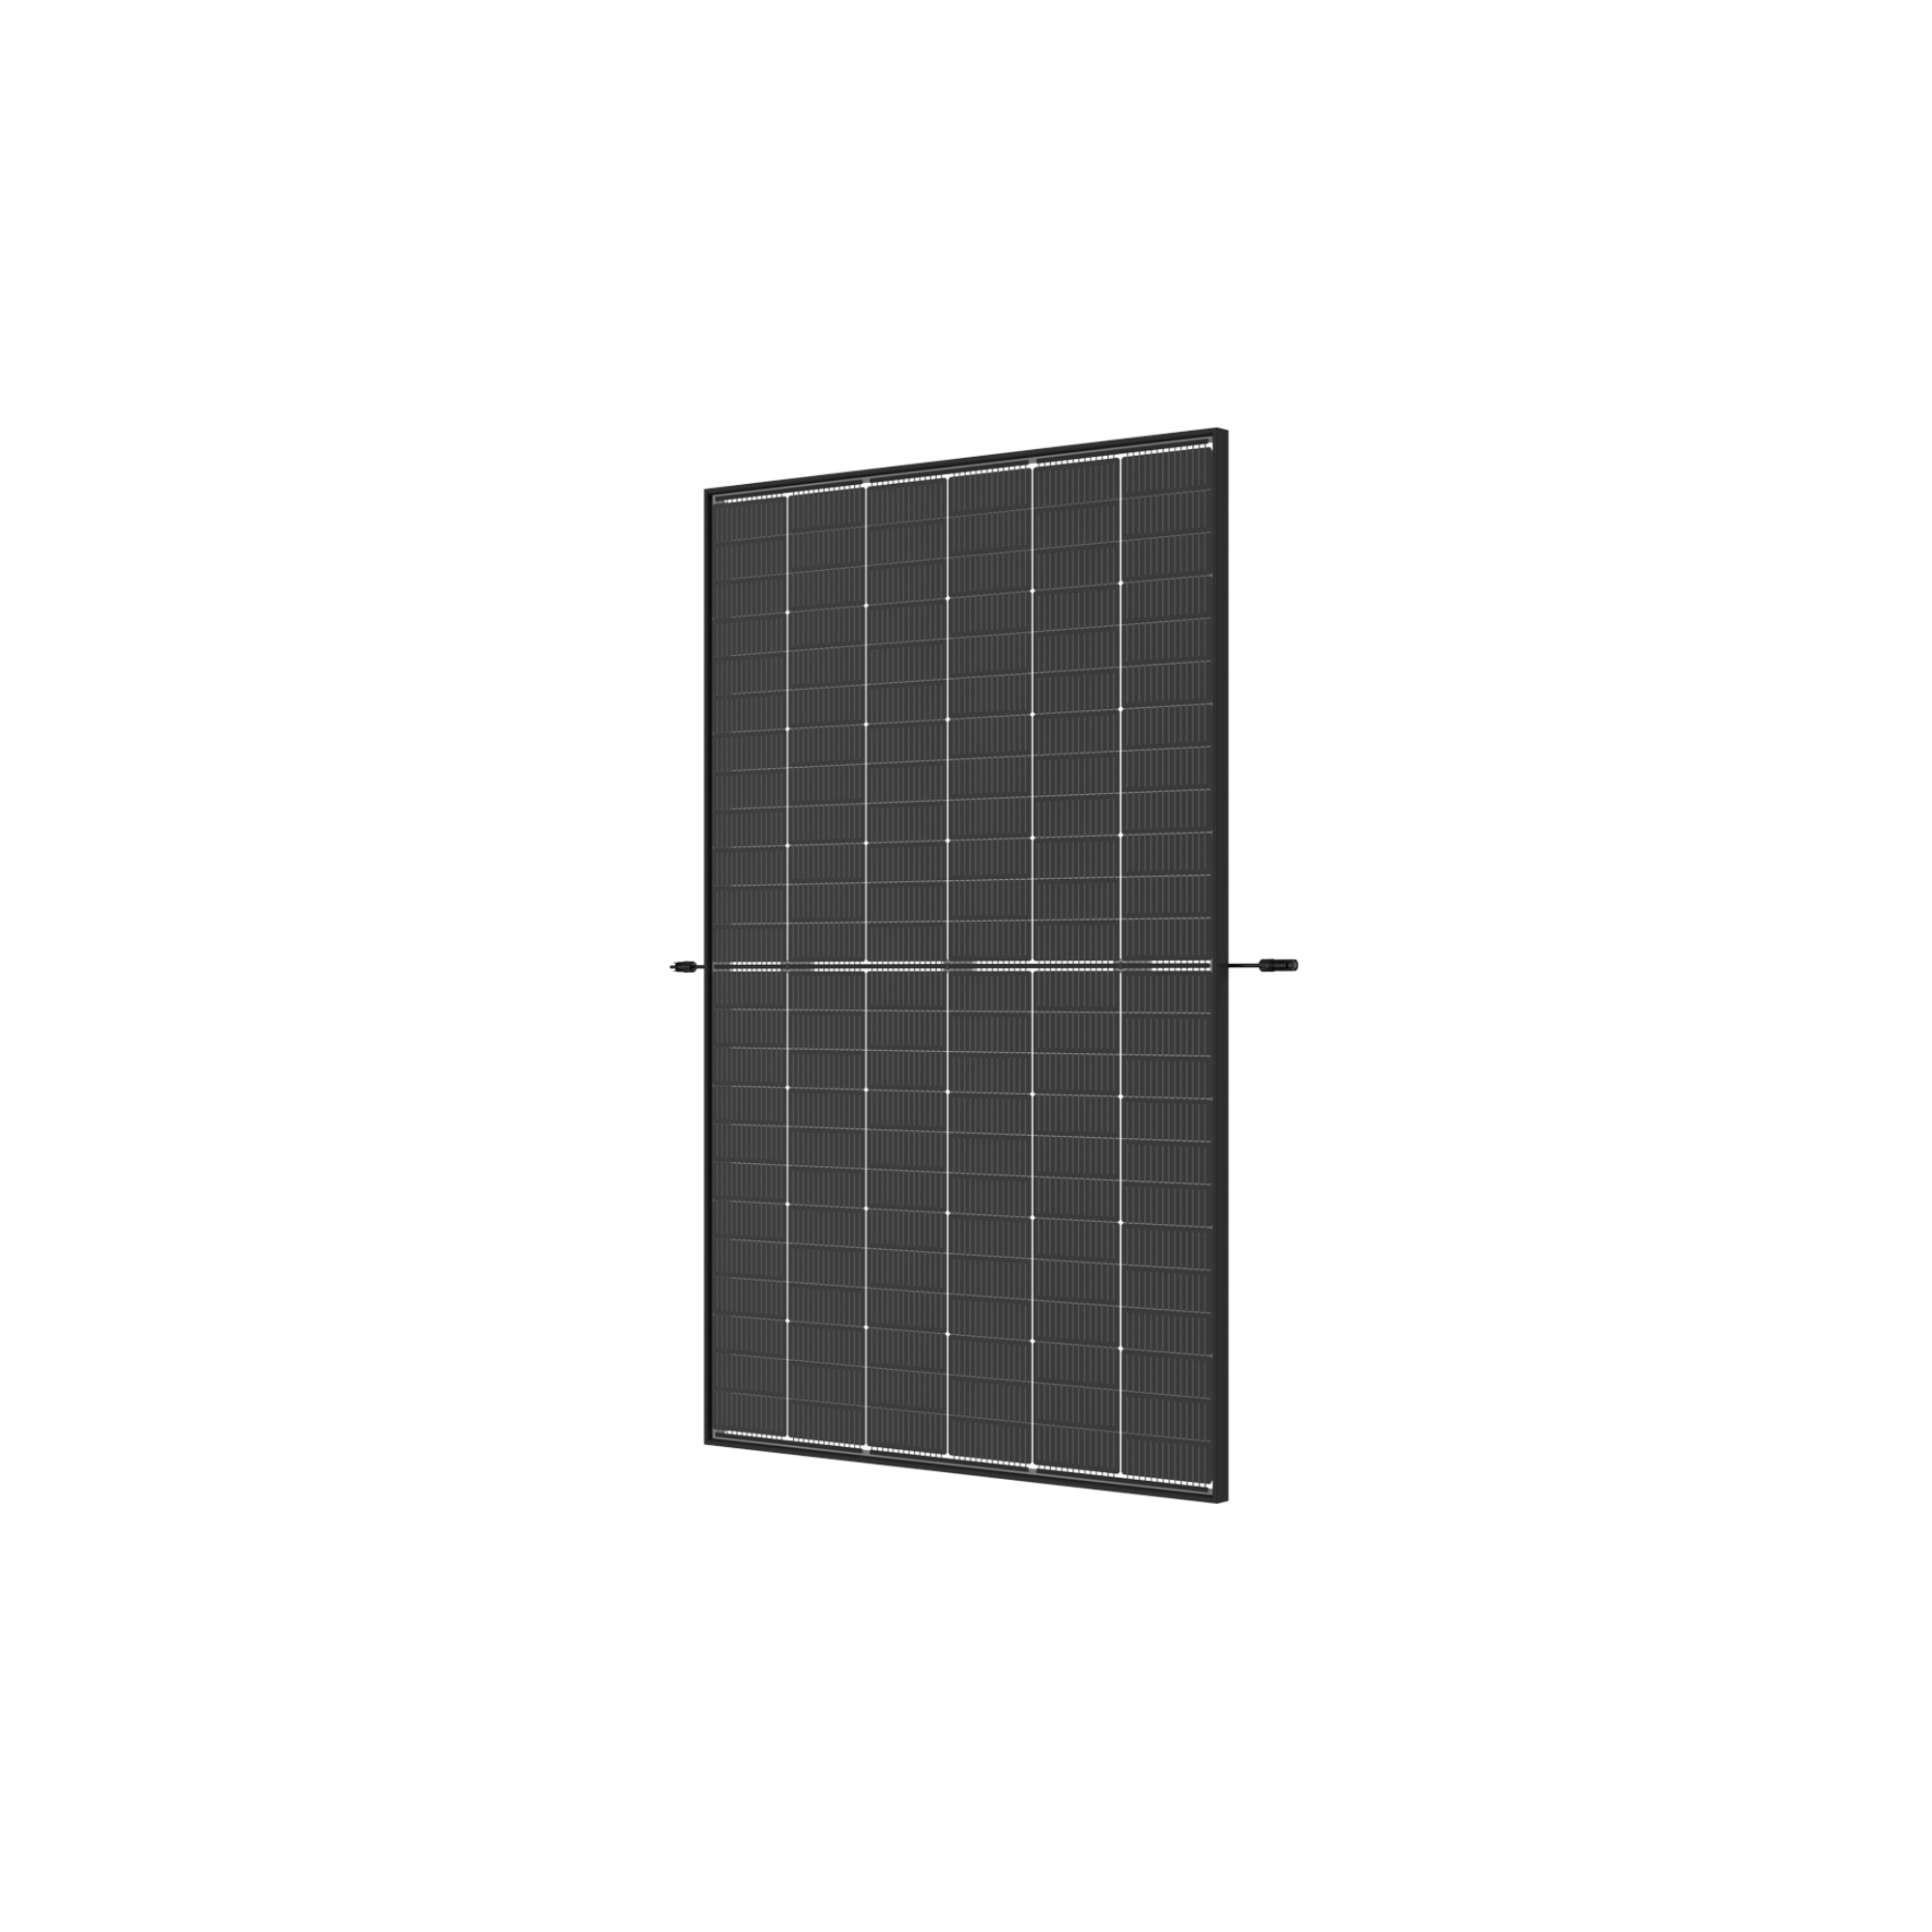 Trina Solar Vertex S+ NEG9RC.27 bifacial